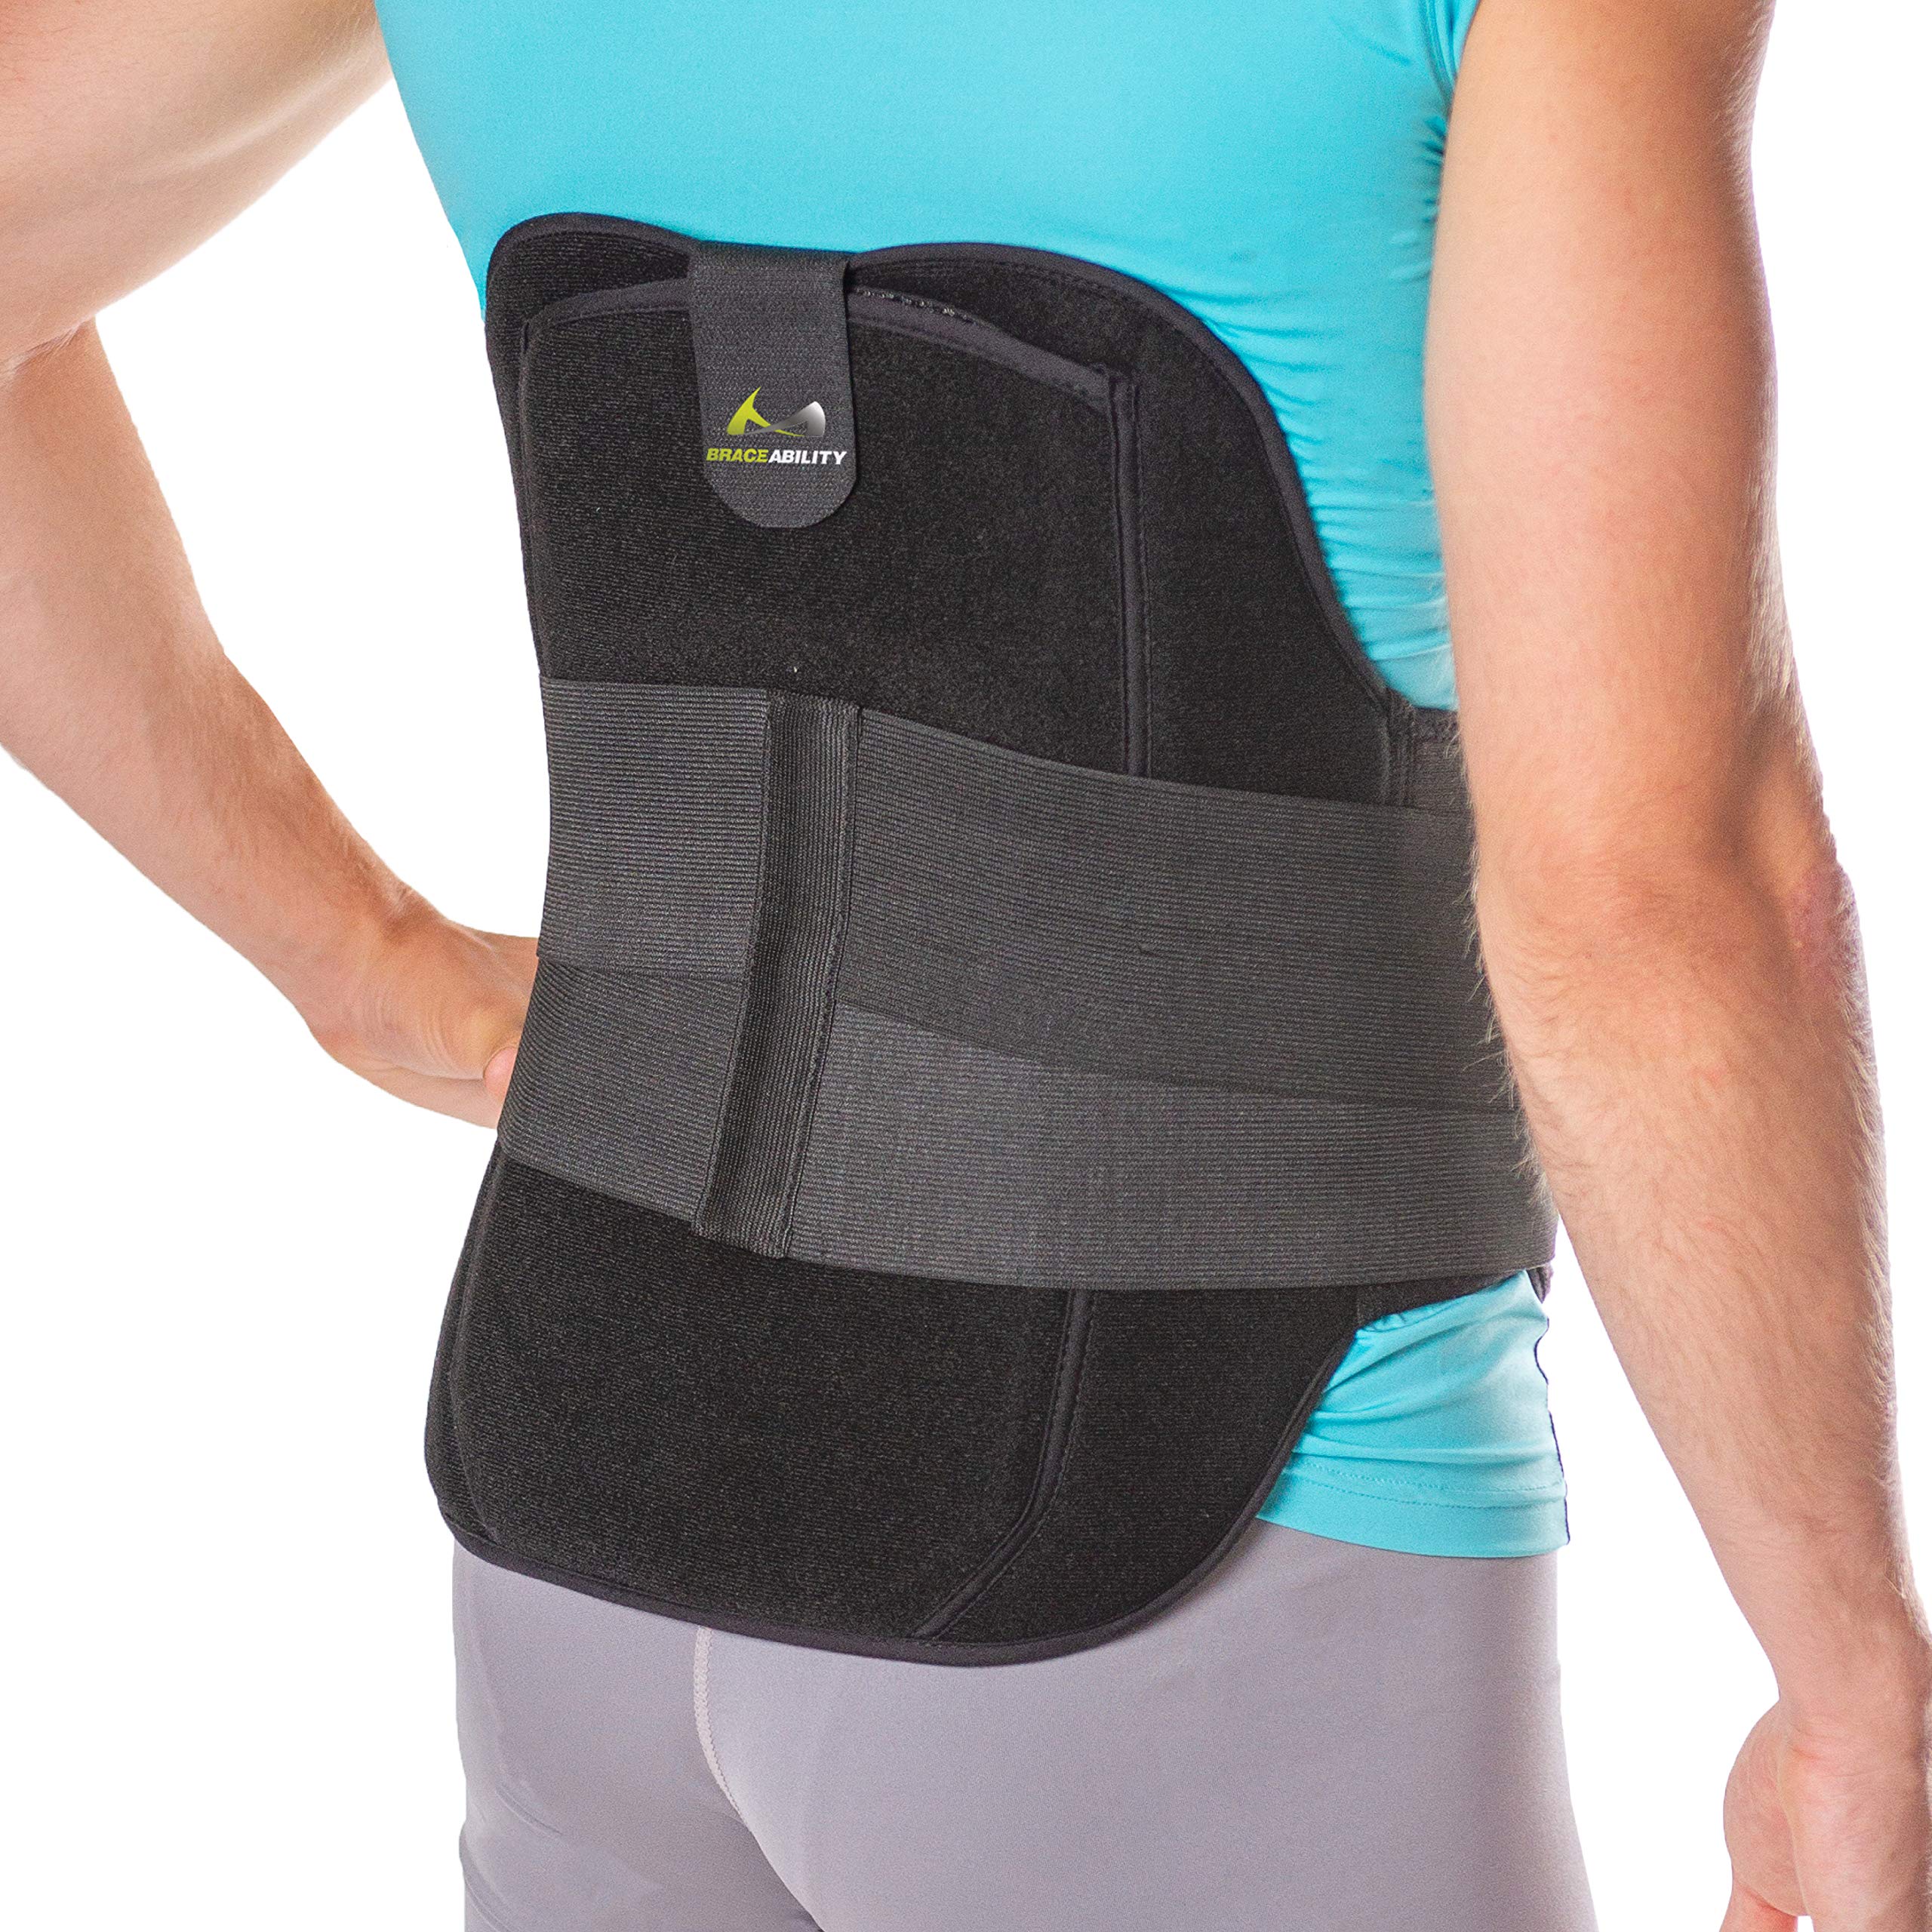 LSO Lumbar Back Brace: Sciatica, Scoliosis & Lower Back Pain